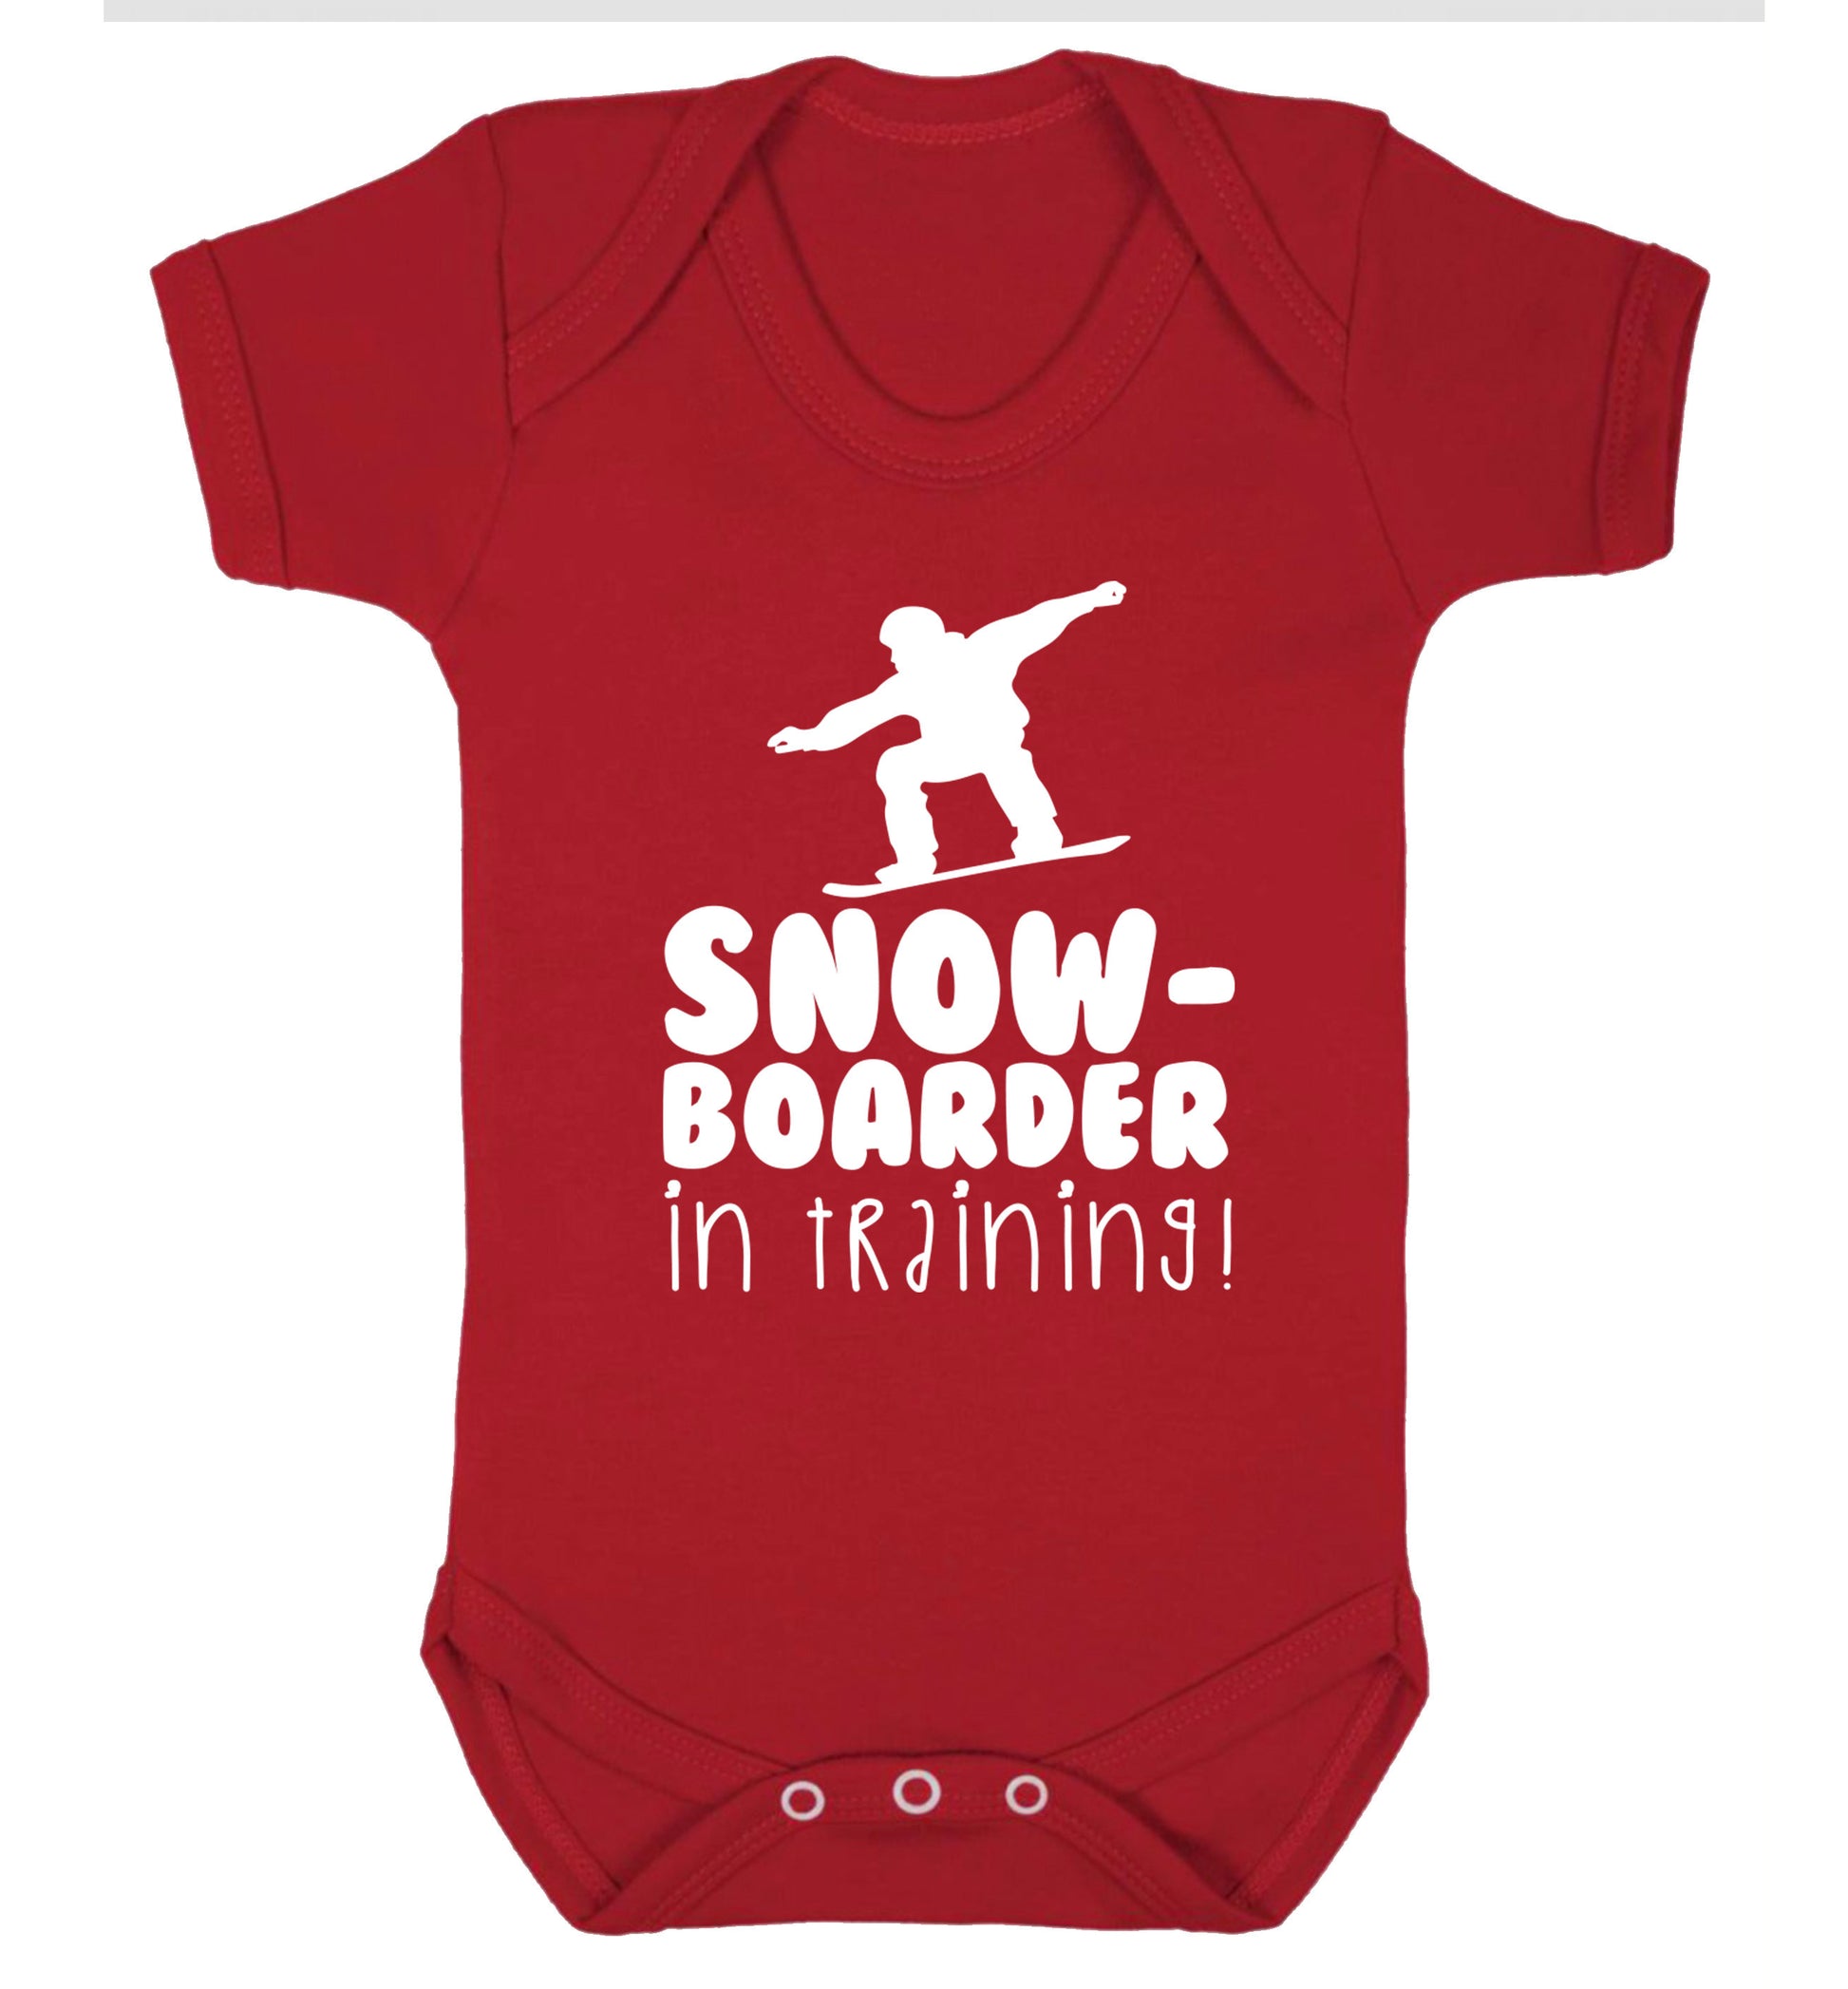 Snowboarder in training Baby Vest red 18-24 months